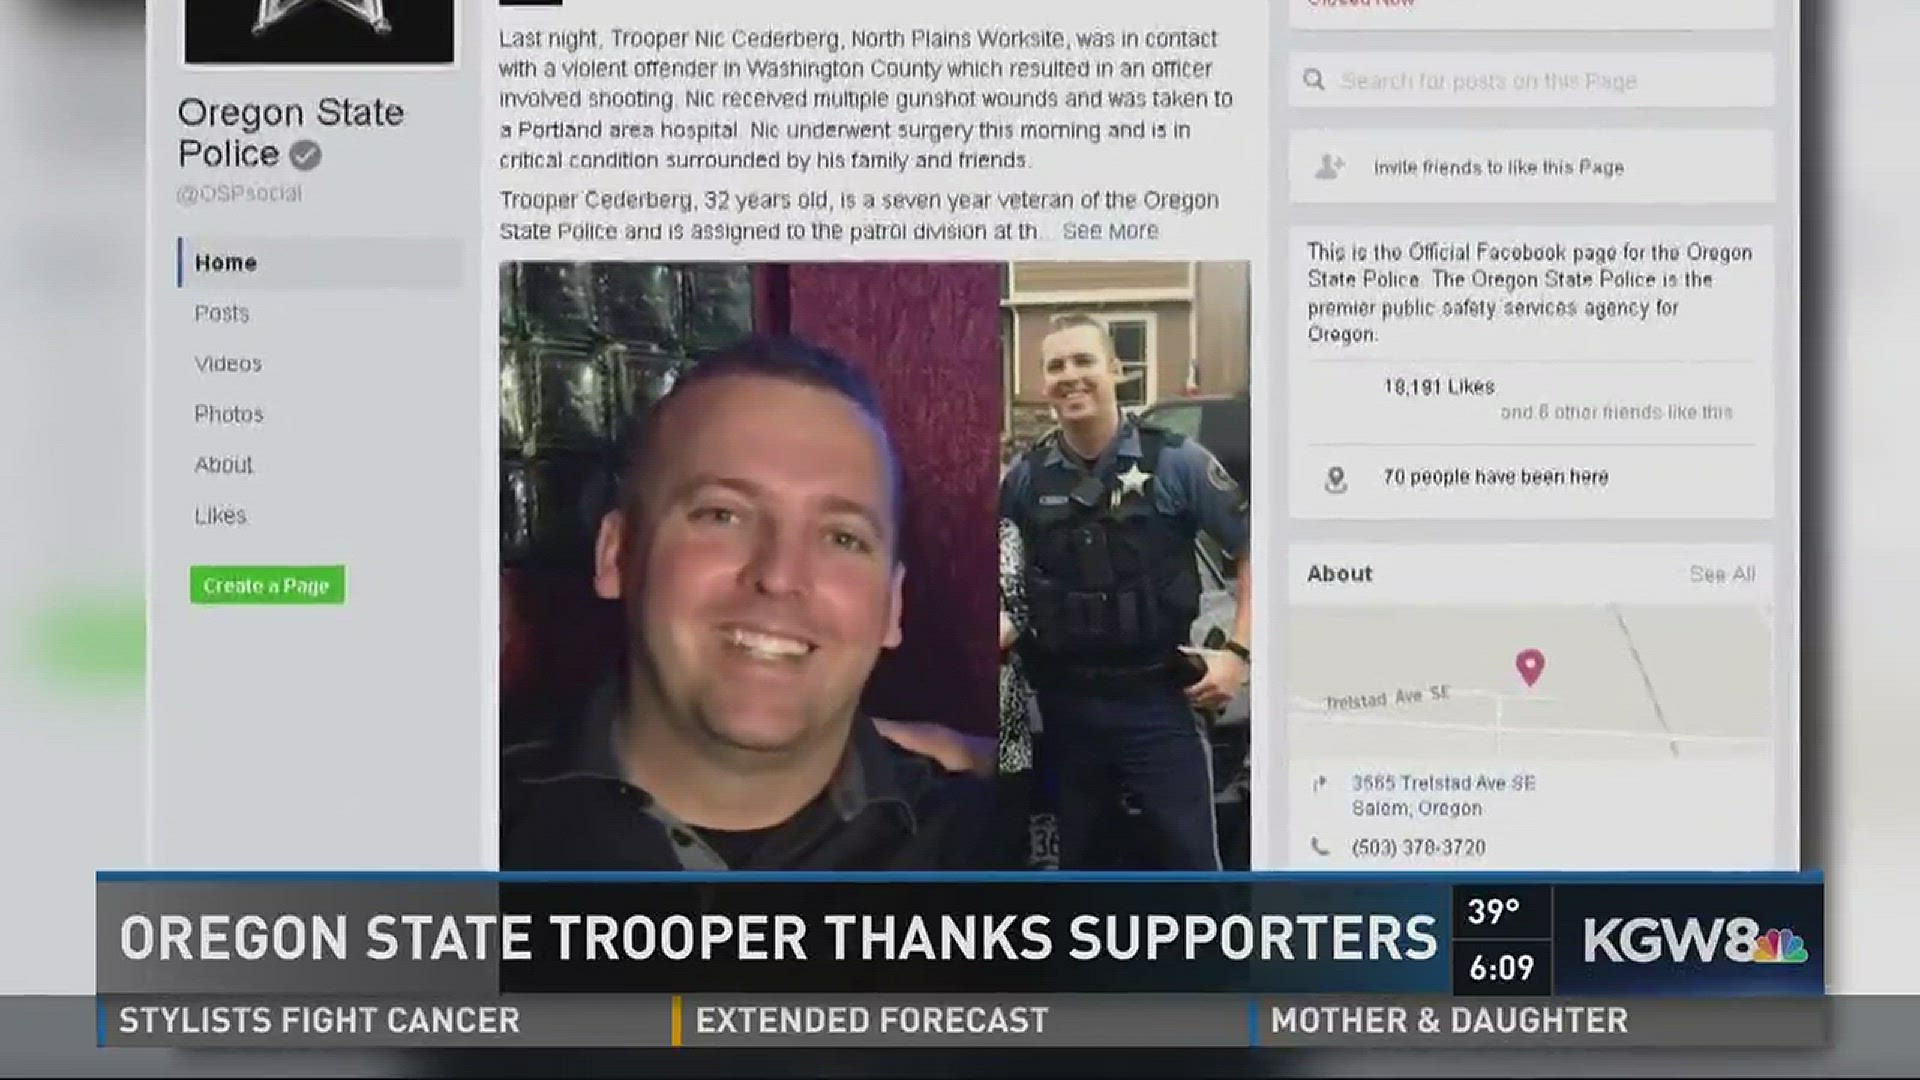 Trooper makes progress after surgeries